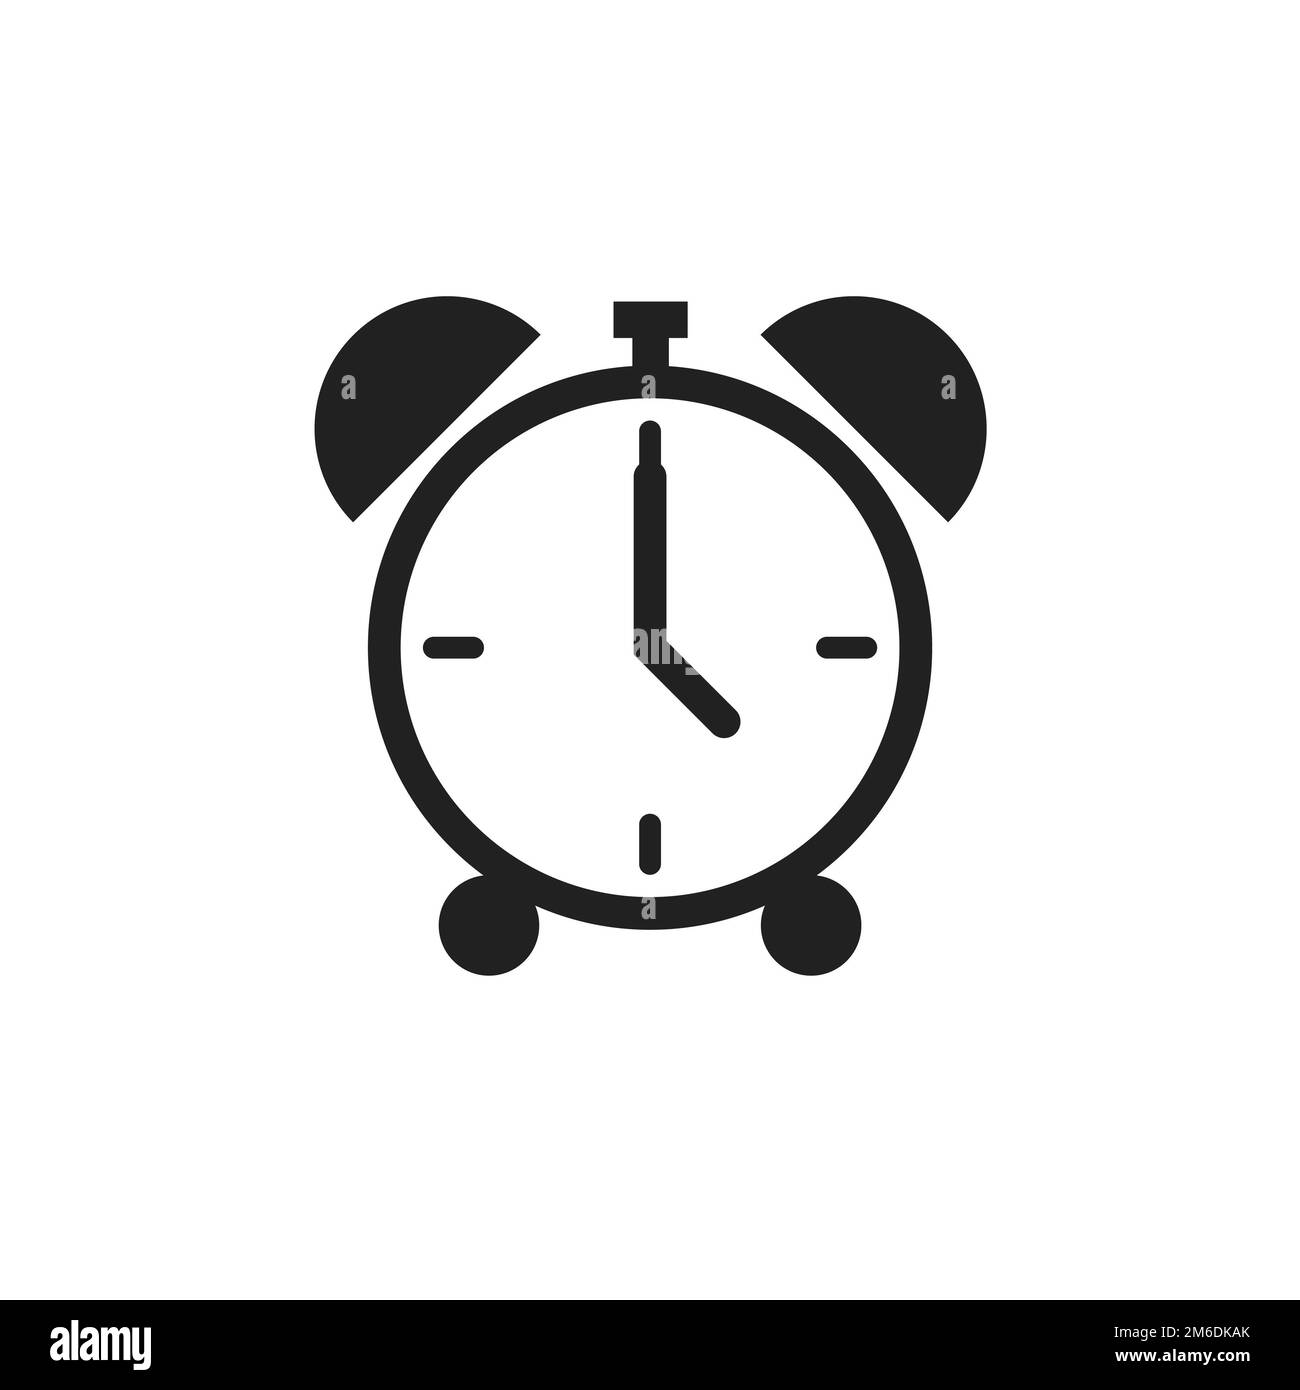 Alarm clock icon isolated on white background. Time retro symbol. Classic old alarm. Stock Photo